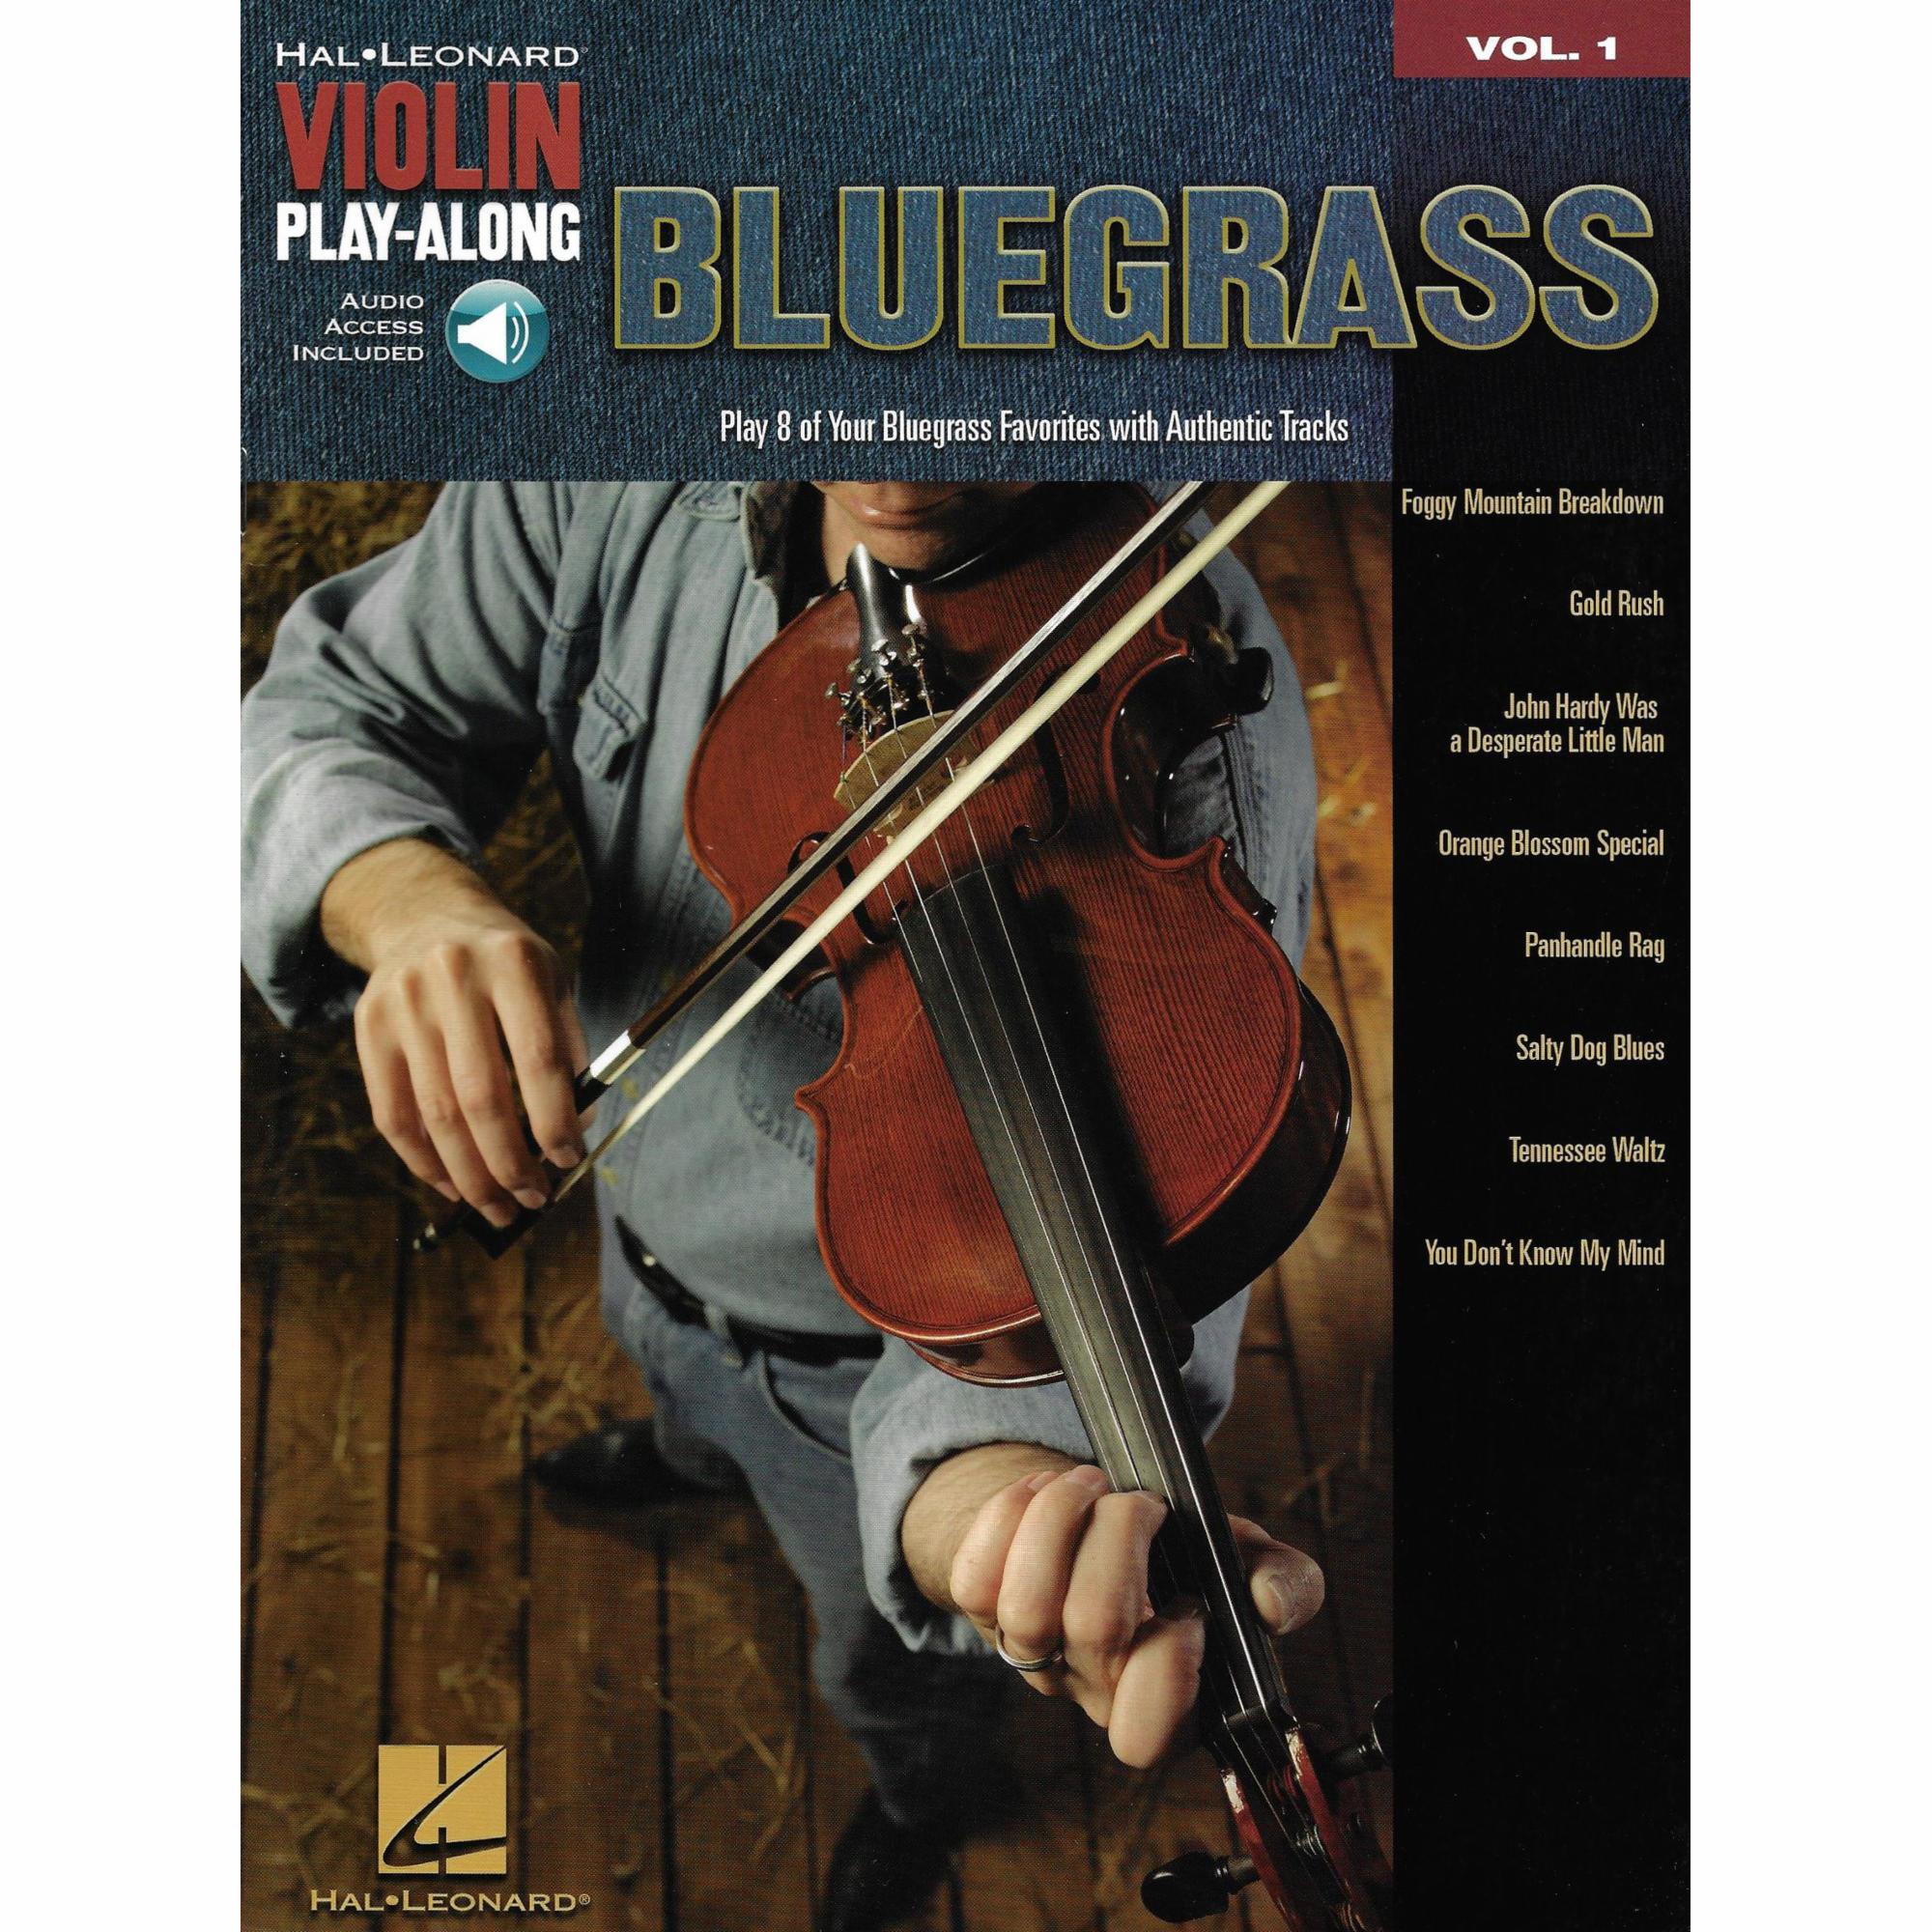 Bluegrass for Violin